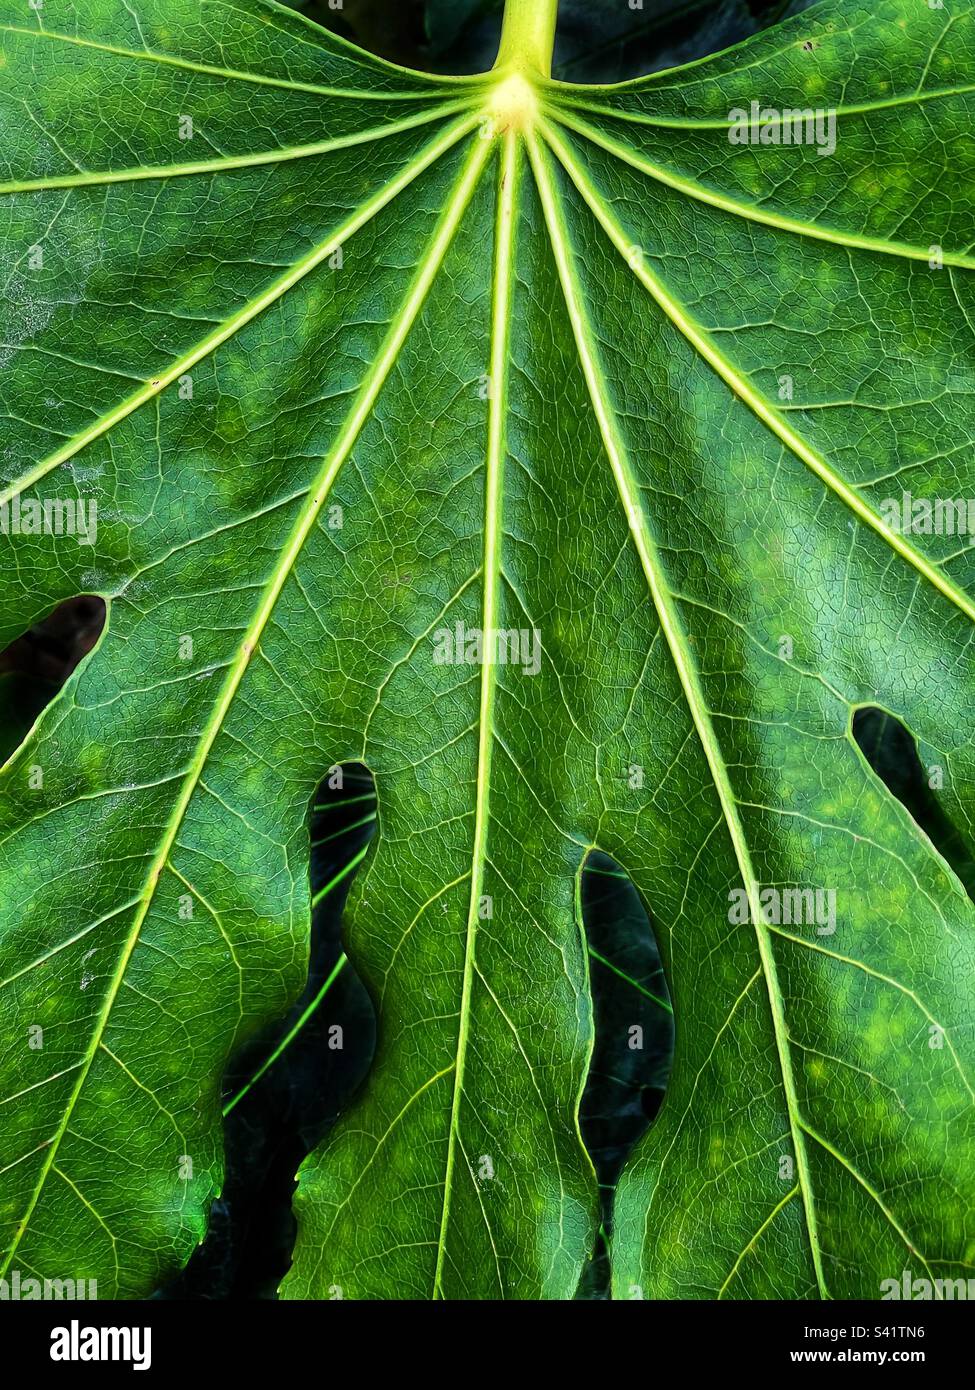 Leaf of Japanese aralia (castor oil plant) Stock Photo